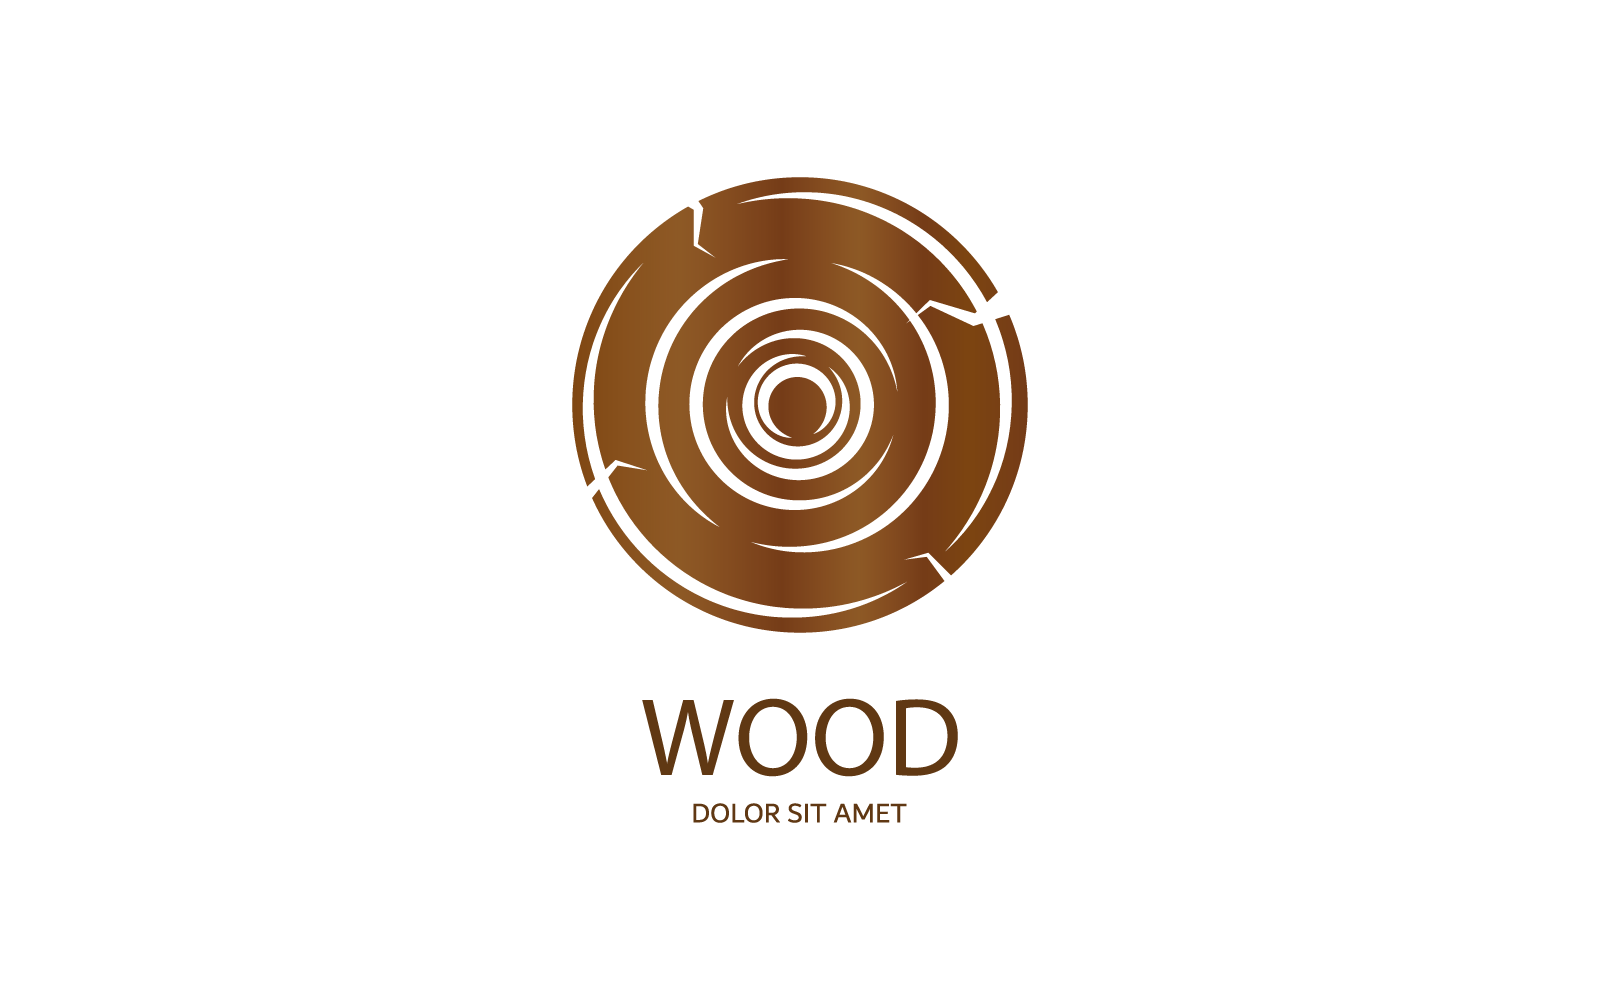 Wood logo vector illustration flat design template